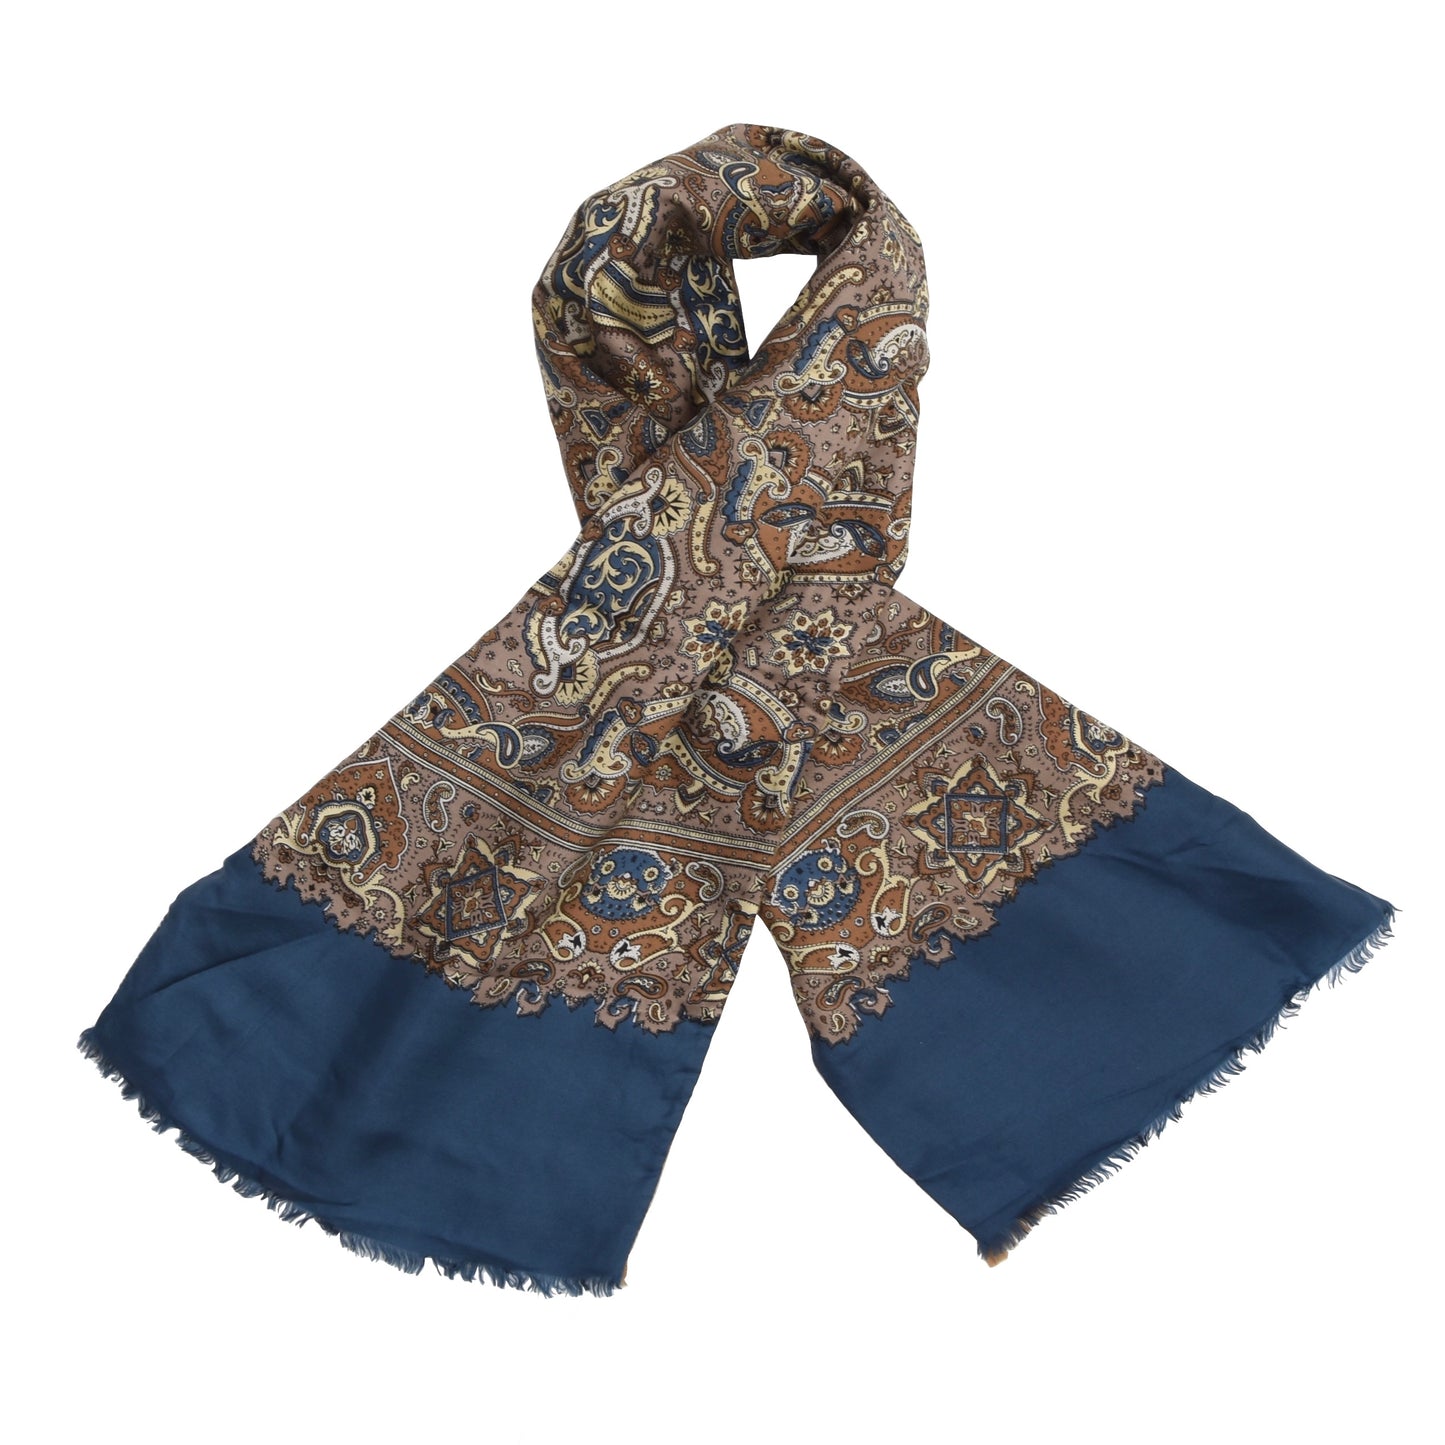 Doppelseitiger Schal aus Seide/Wolle - Blau/Beige Paisley